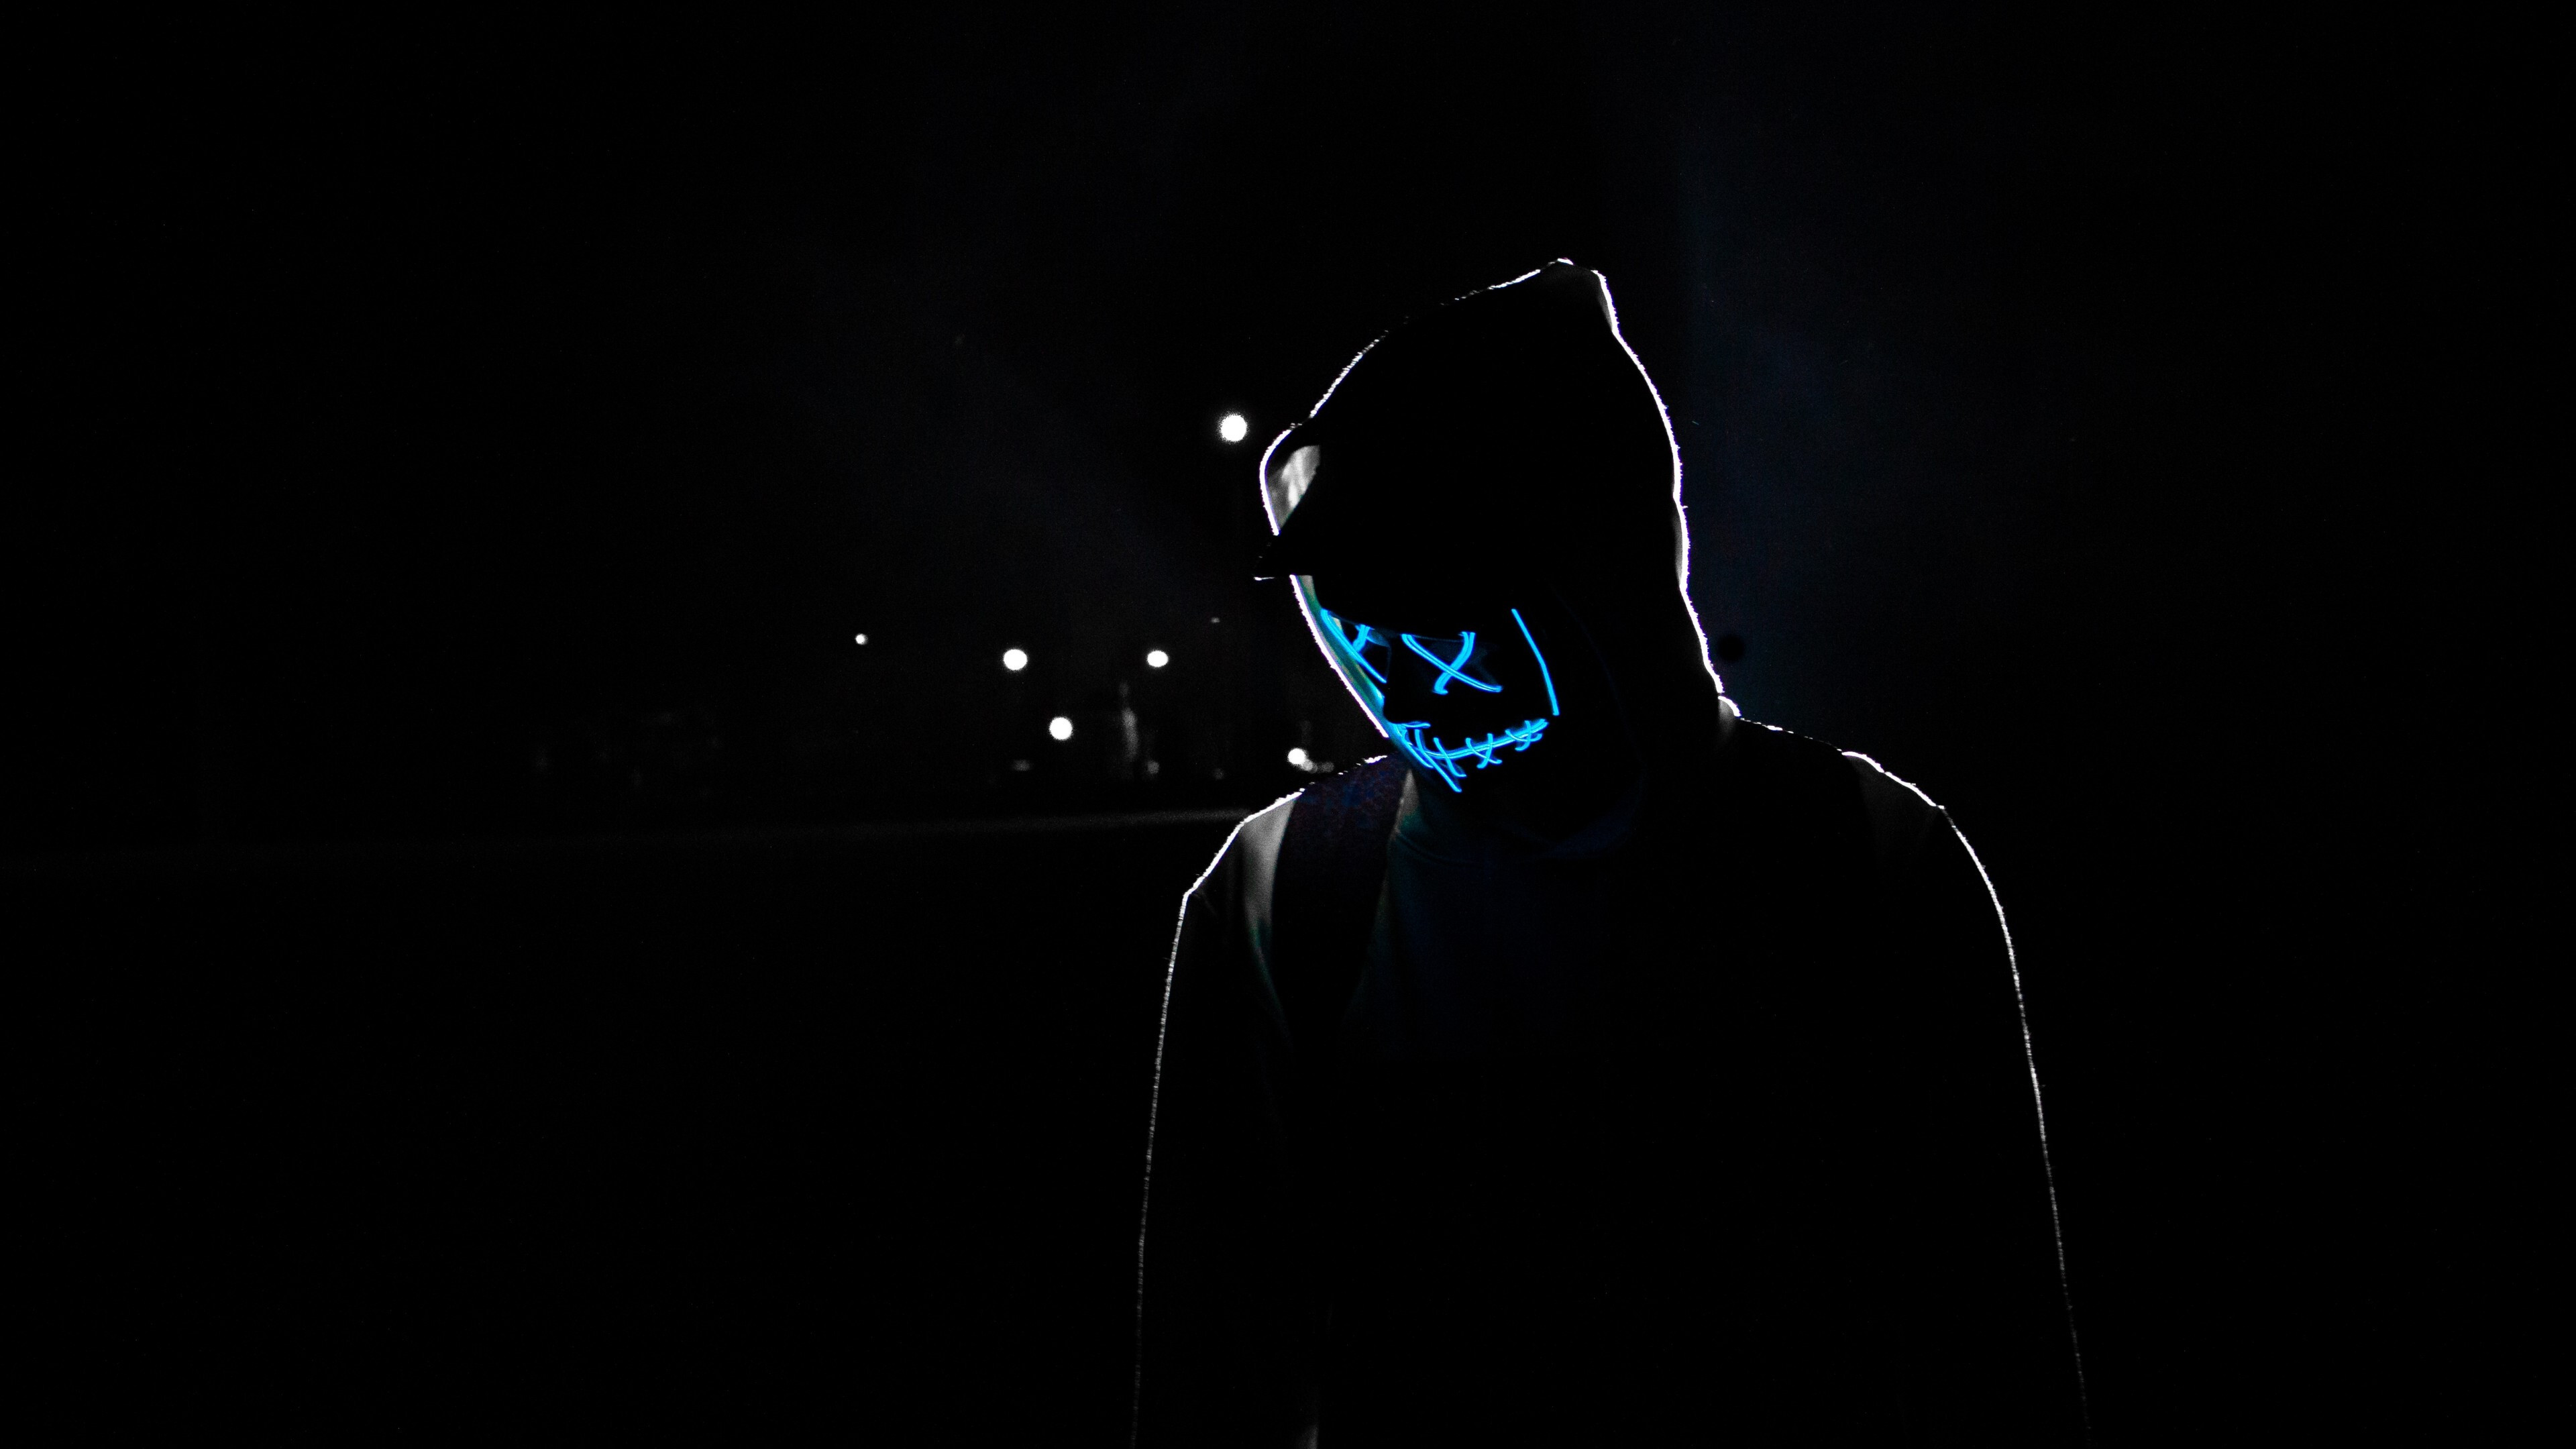 Glow in the Dark: Light-emitting mask, Fluorescent figure, Neon lights, Creepy. 3840x2160 4K Wallpaper.